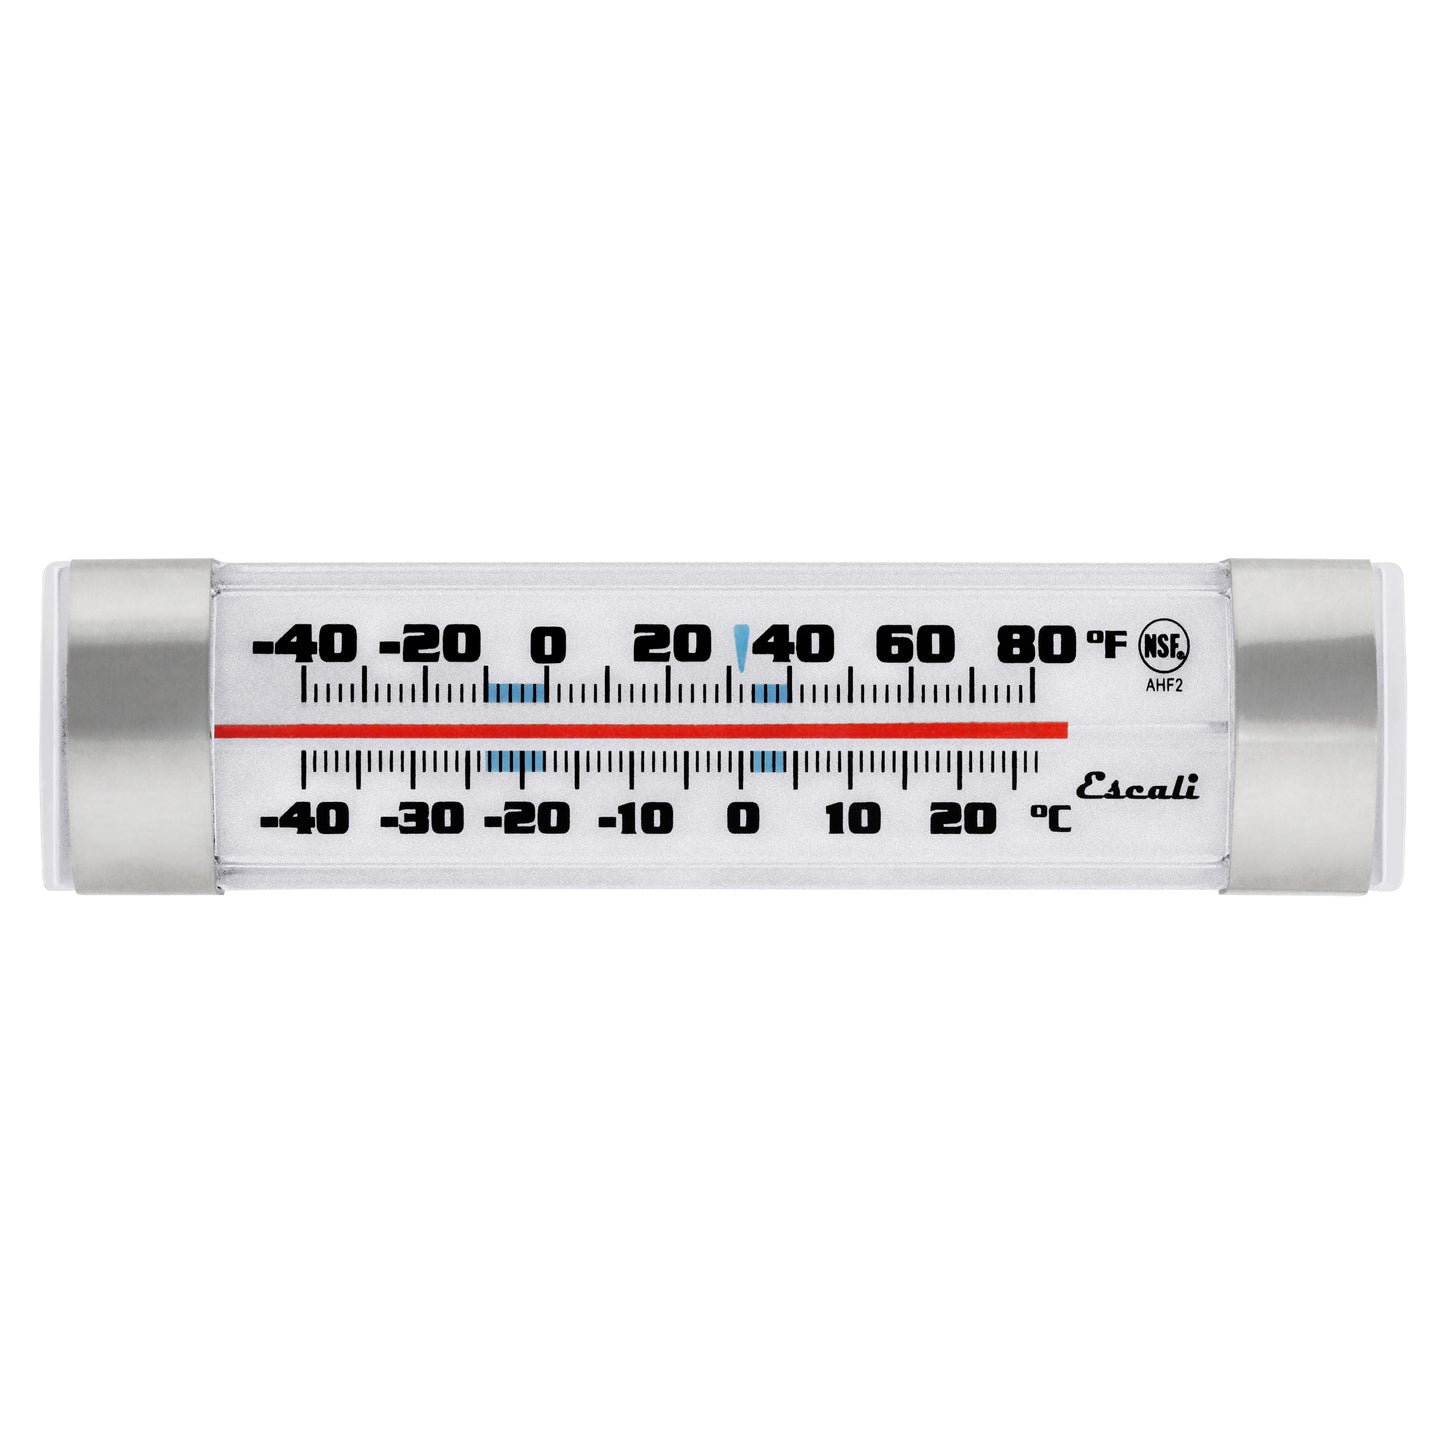 Column Refrigerator / Freezer Thermometer